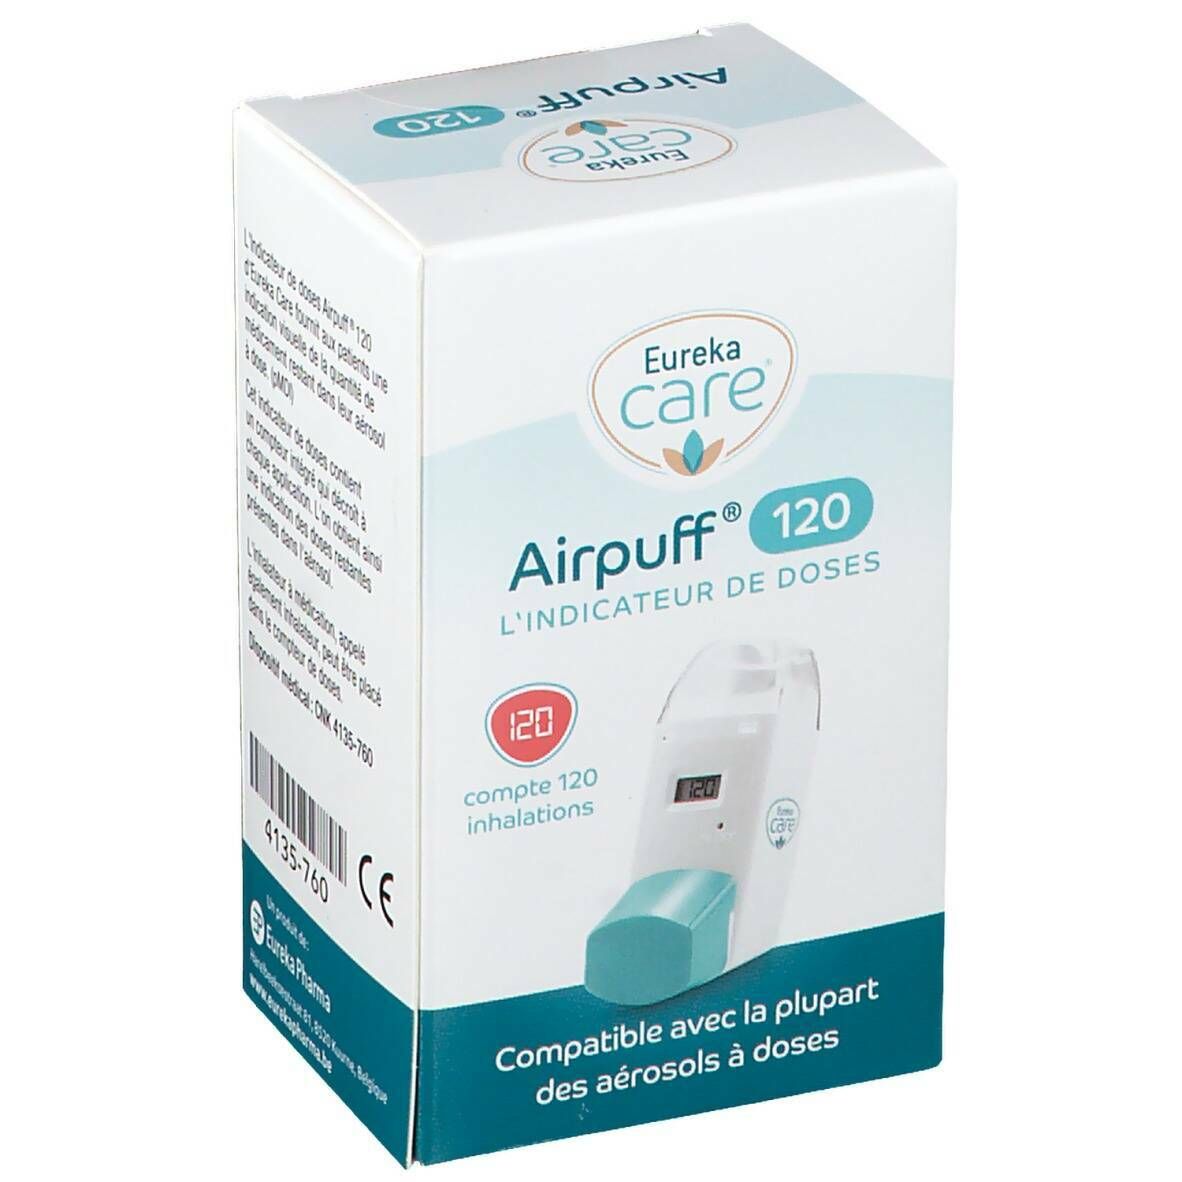 Eureka Care Indicateur de Doses AirPuff 120